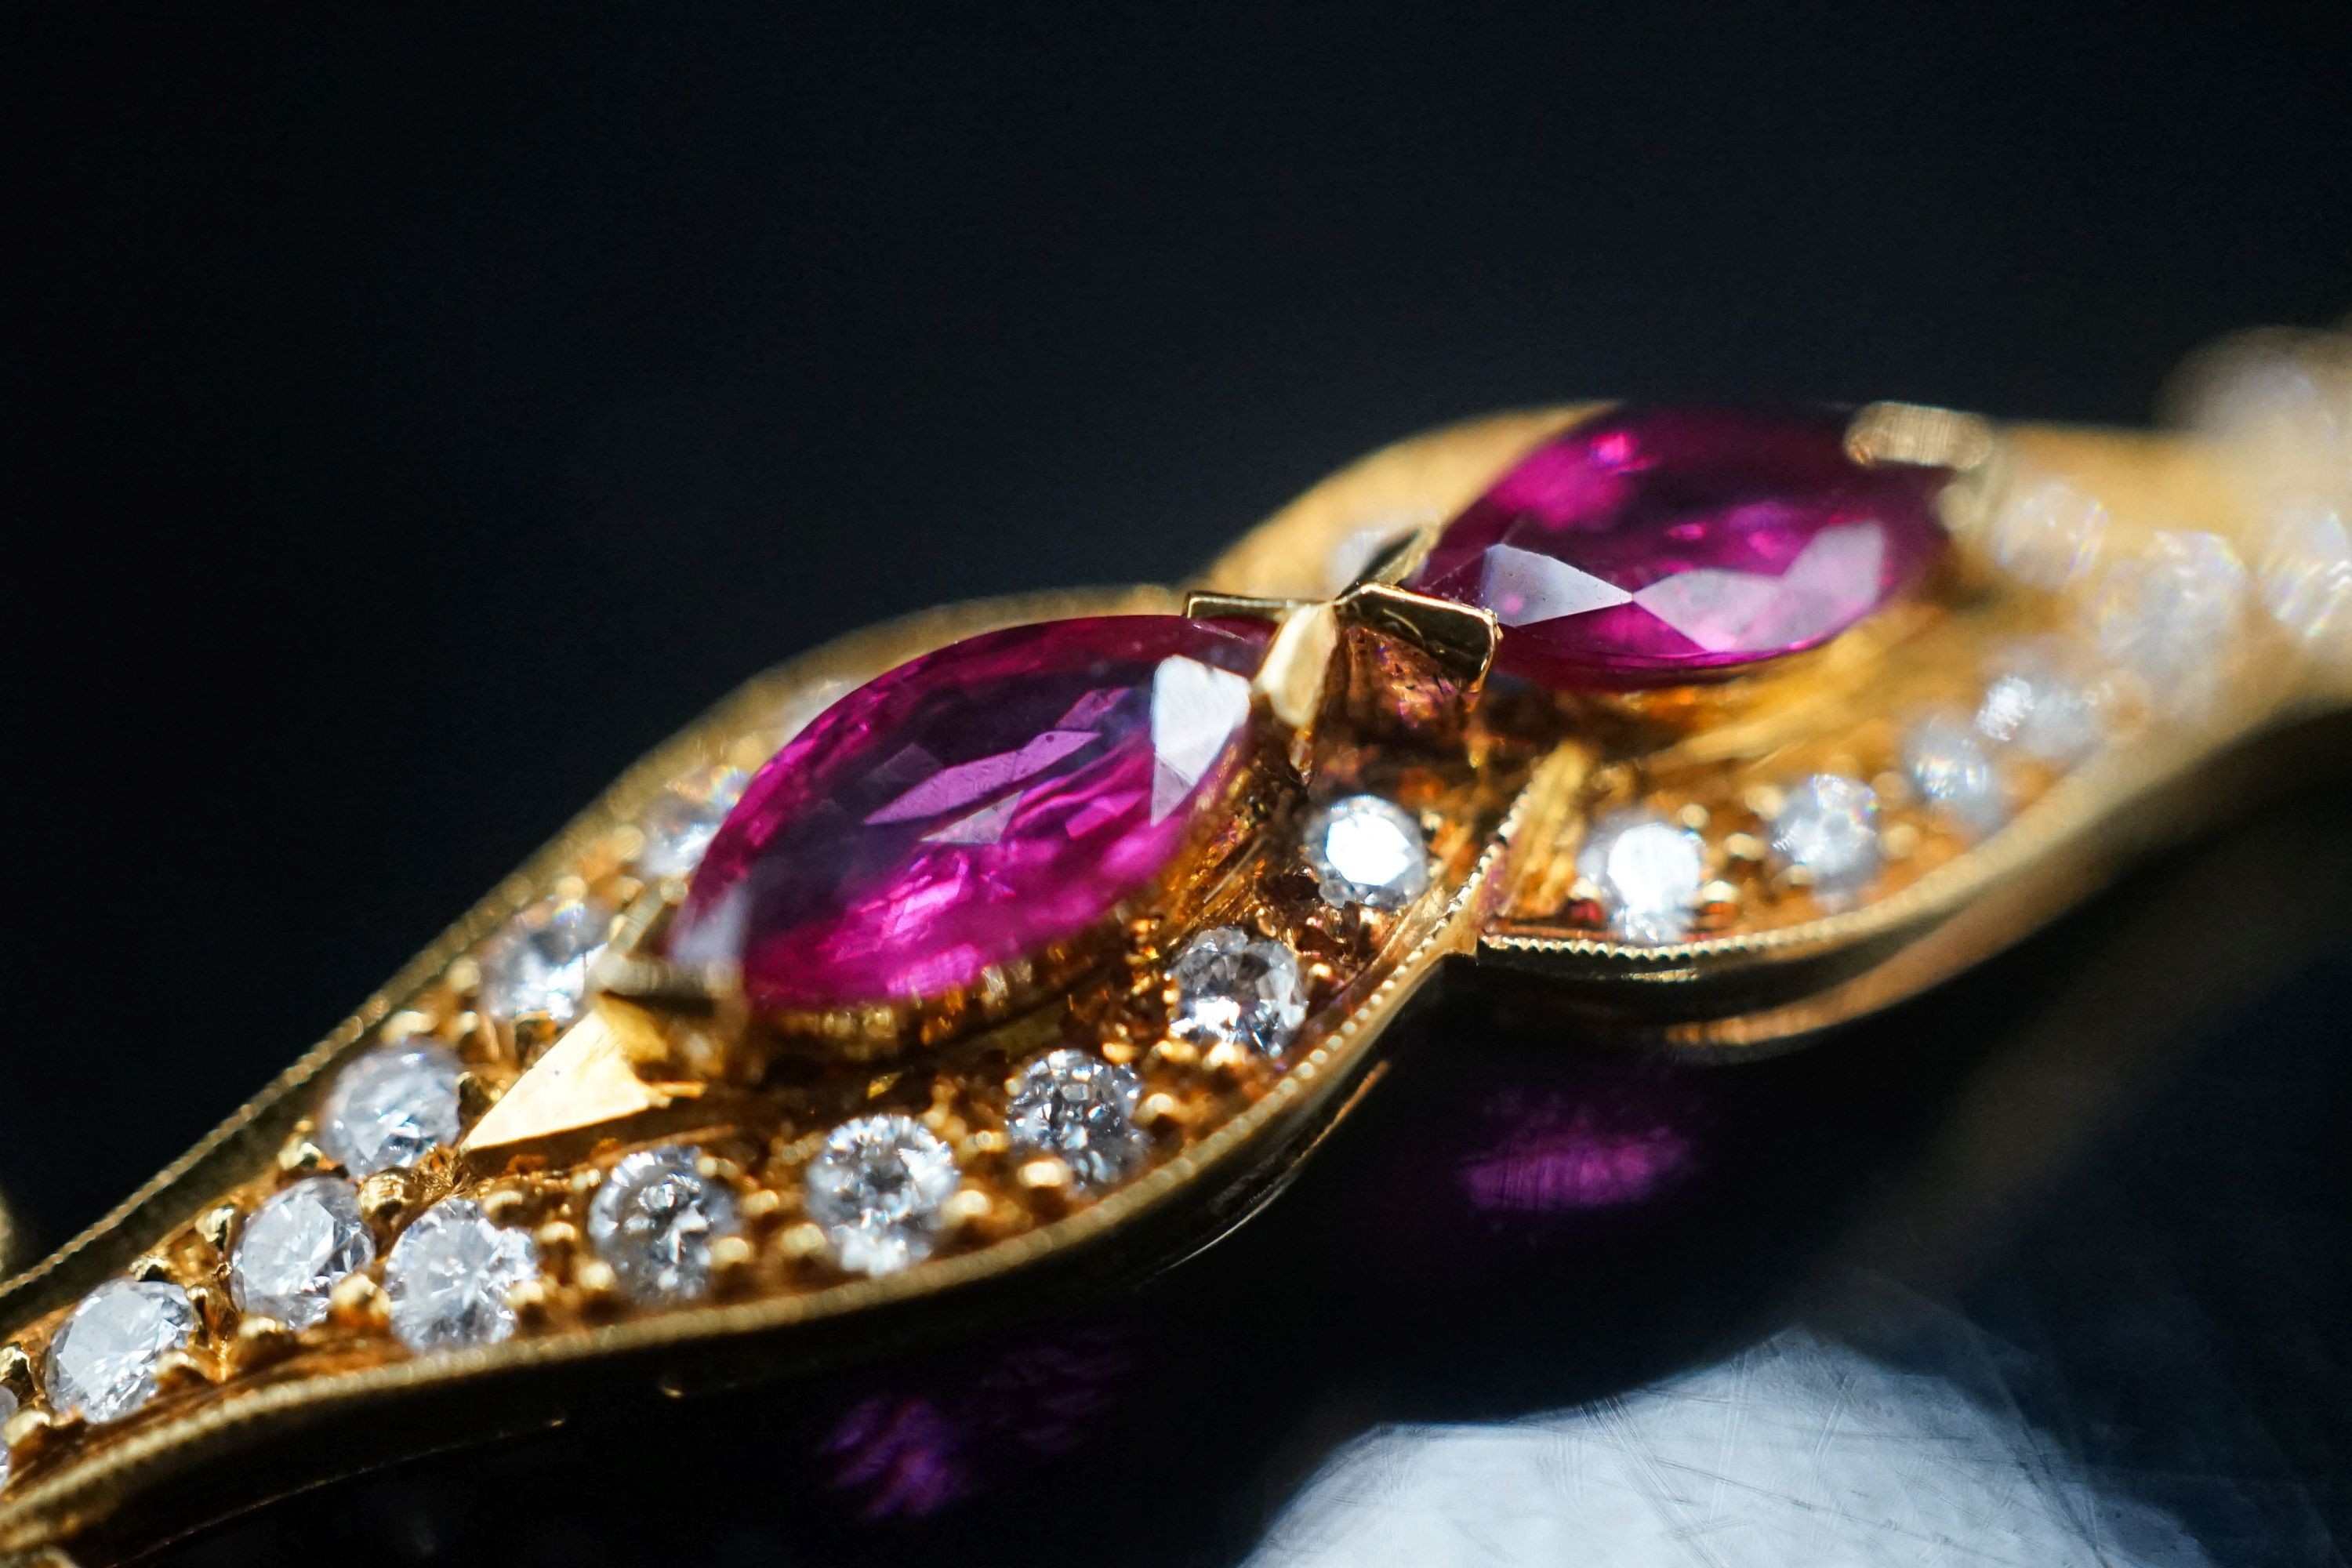 A lady's modern 18k, ruby and diamond set bracelet, 16cm, gross weight 9.2 grams.